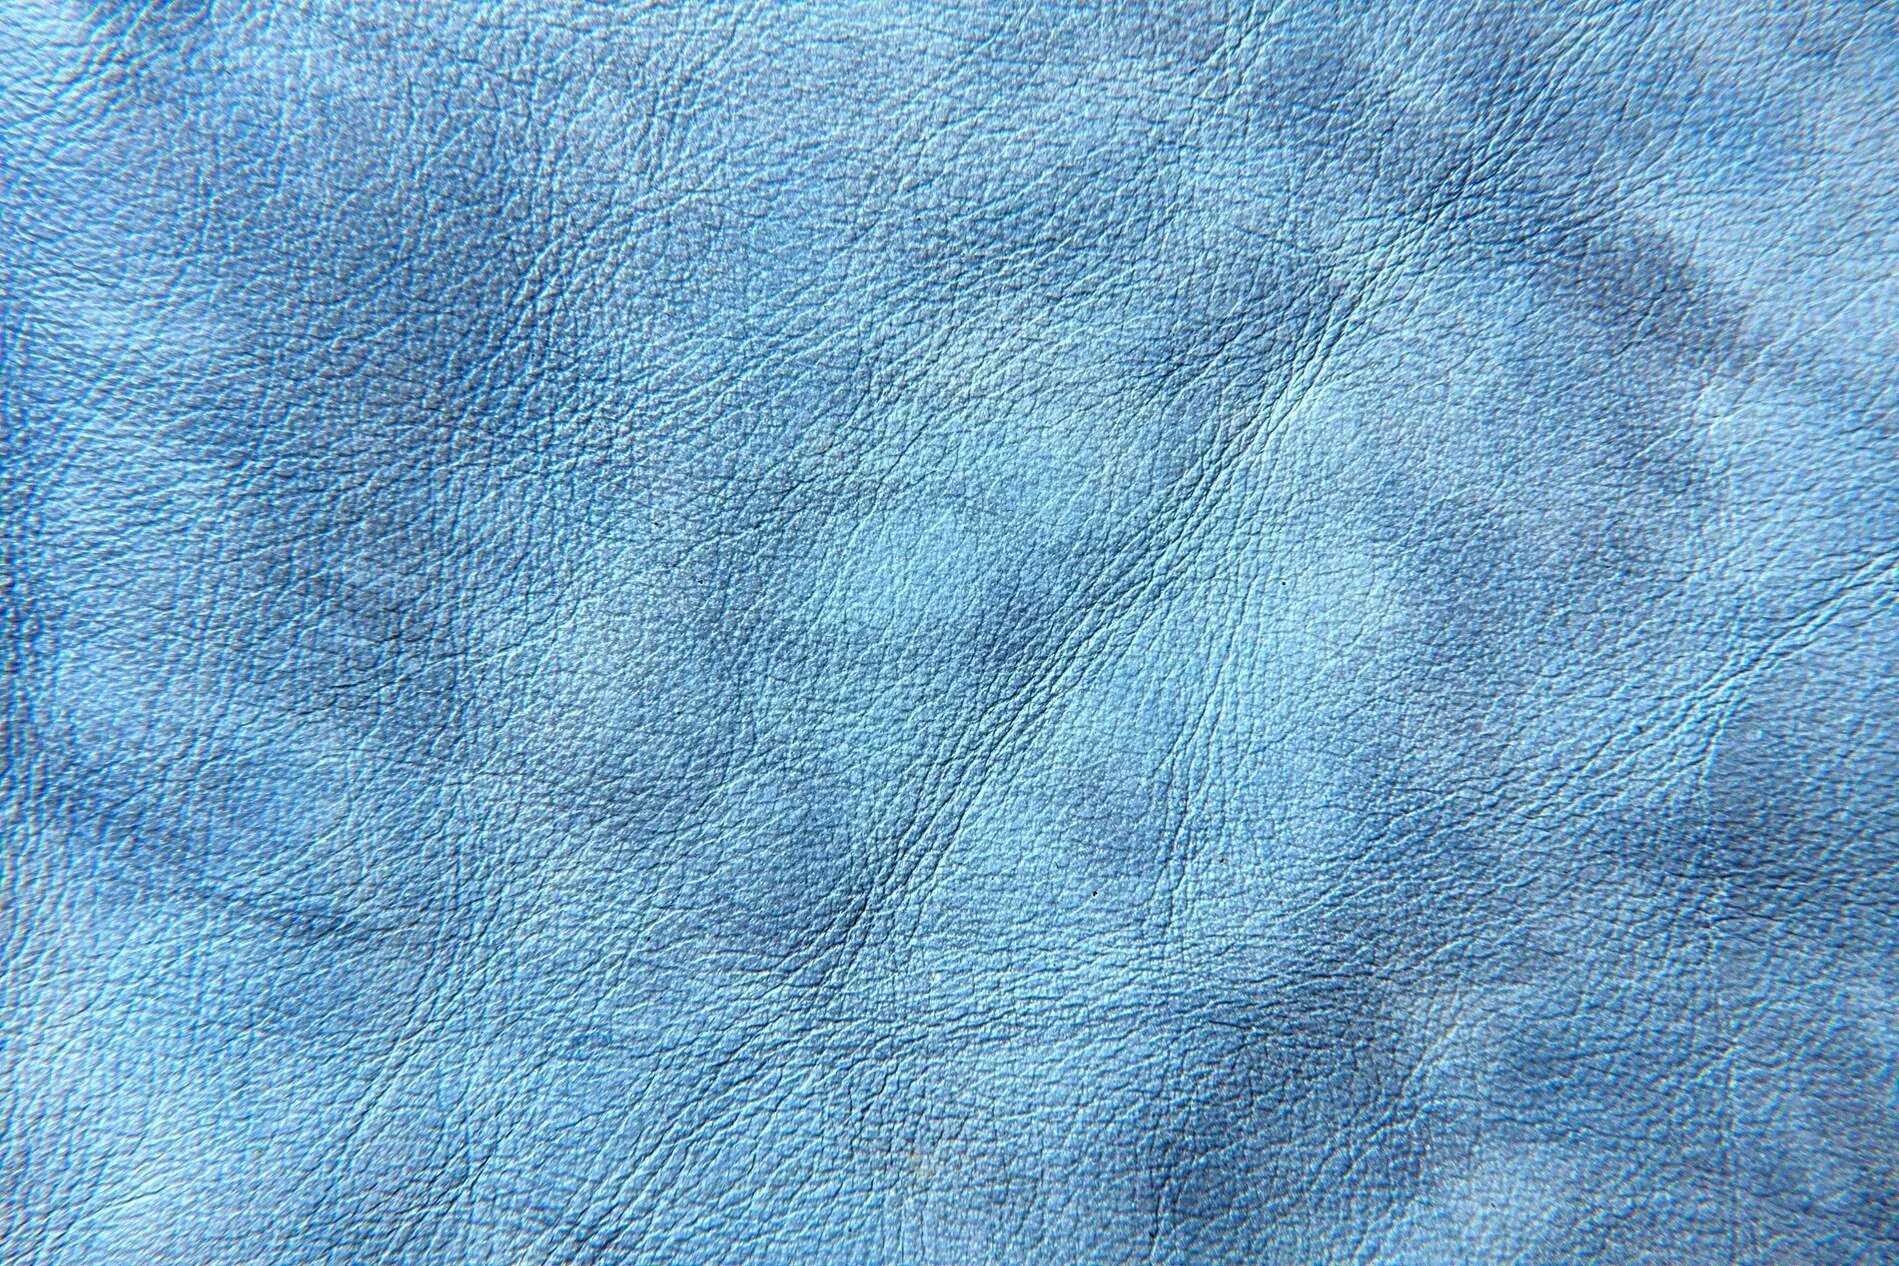 Текстура ткани. Фактура ткани. Голубая ткань. Синяя ткань текстура. Leather blue